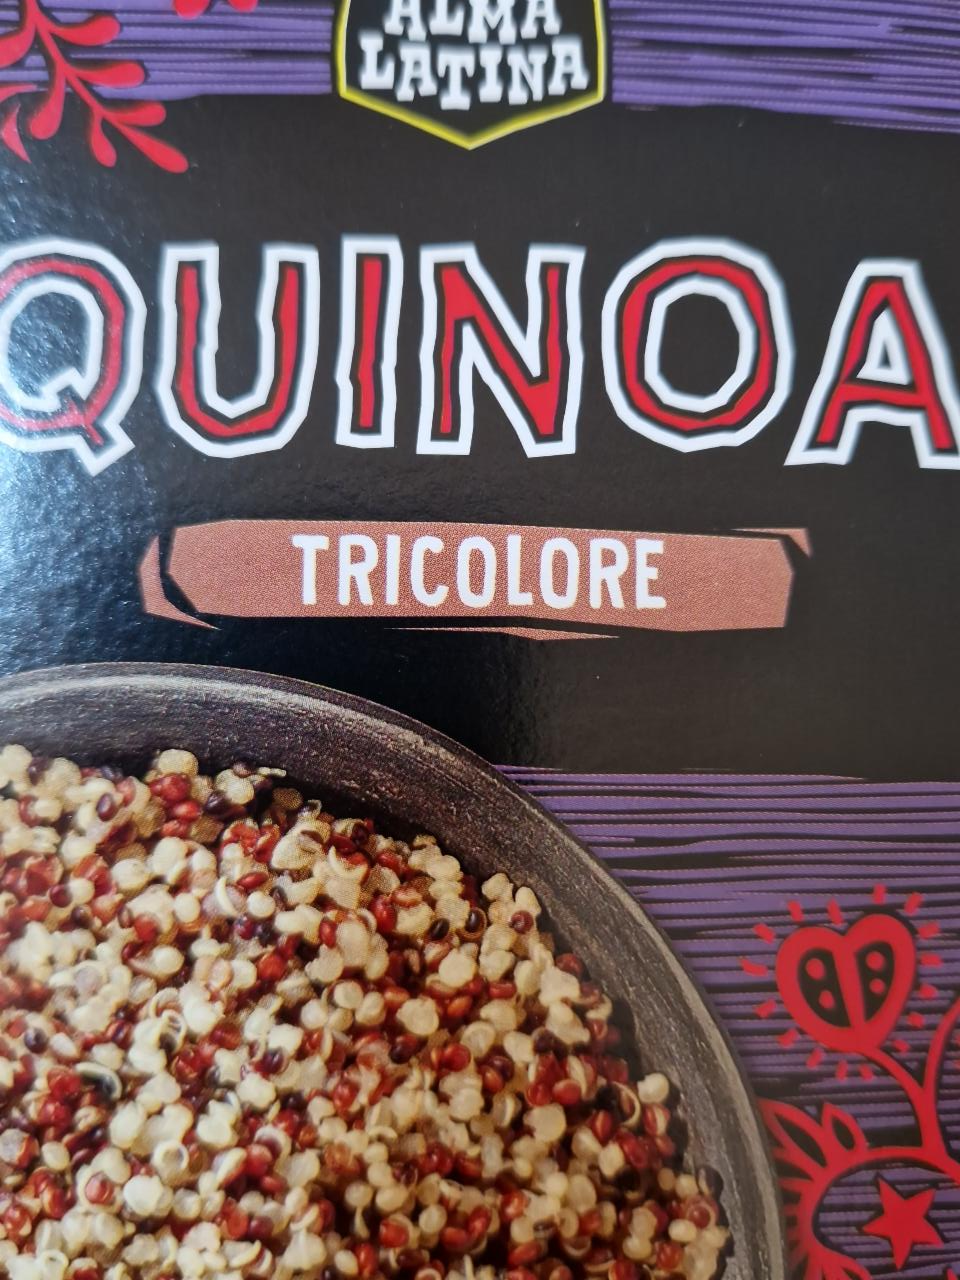 Quinoa tricolore Alma Latina - kJ hodnoty nutriční kalorie, a